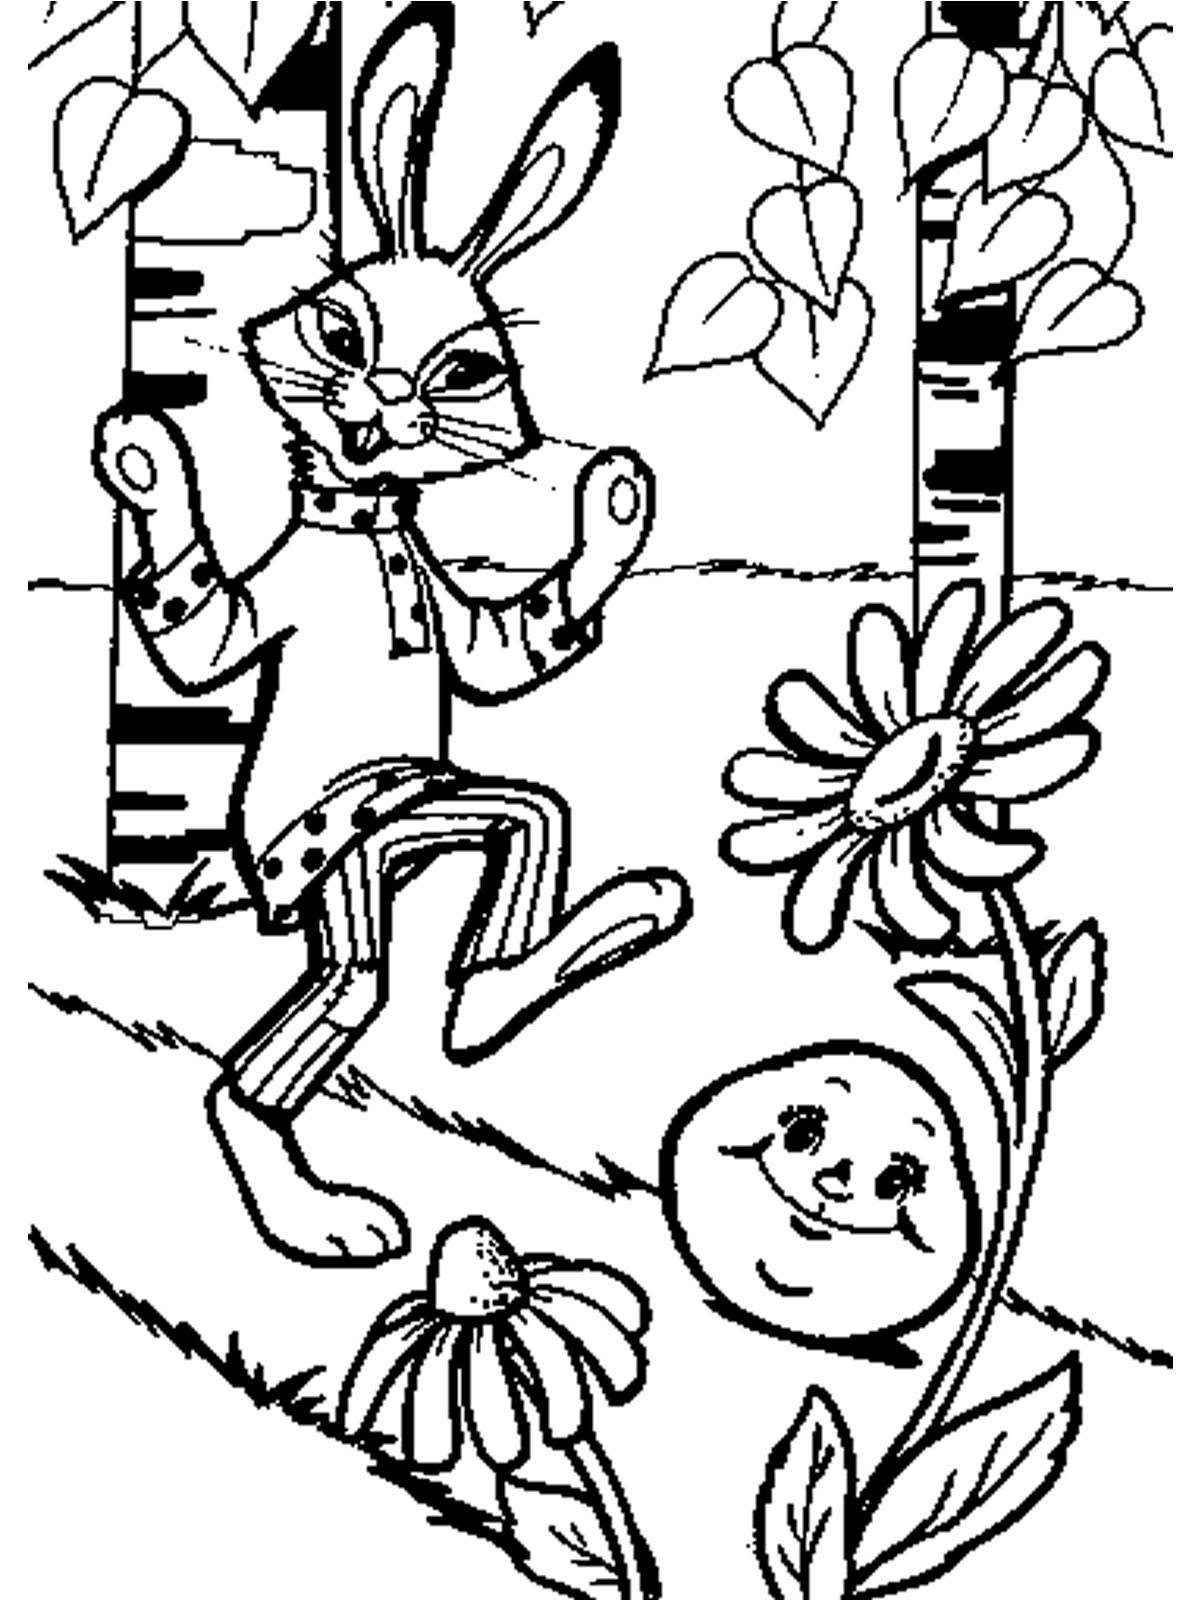 Coloring book humorous hare and bun